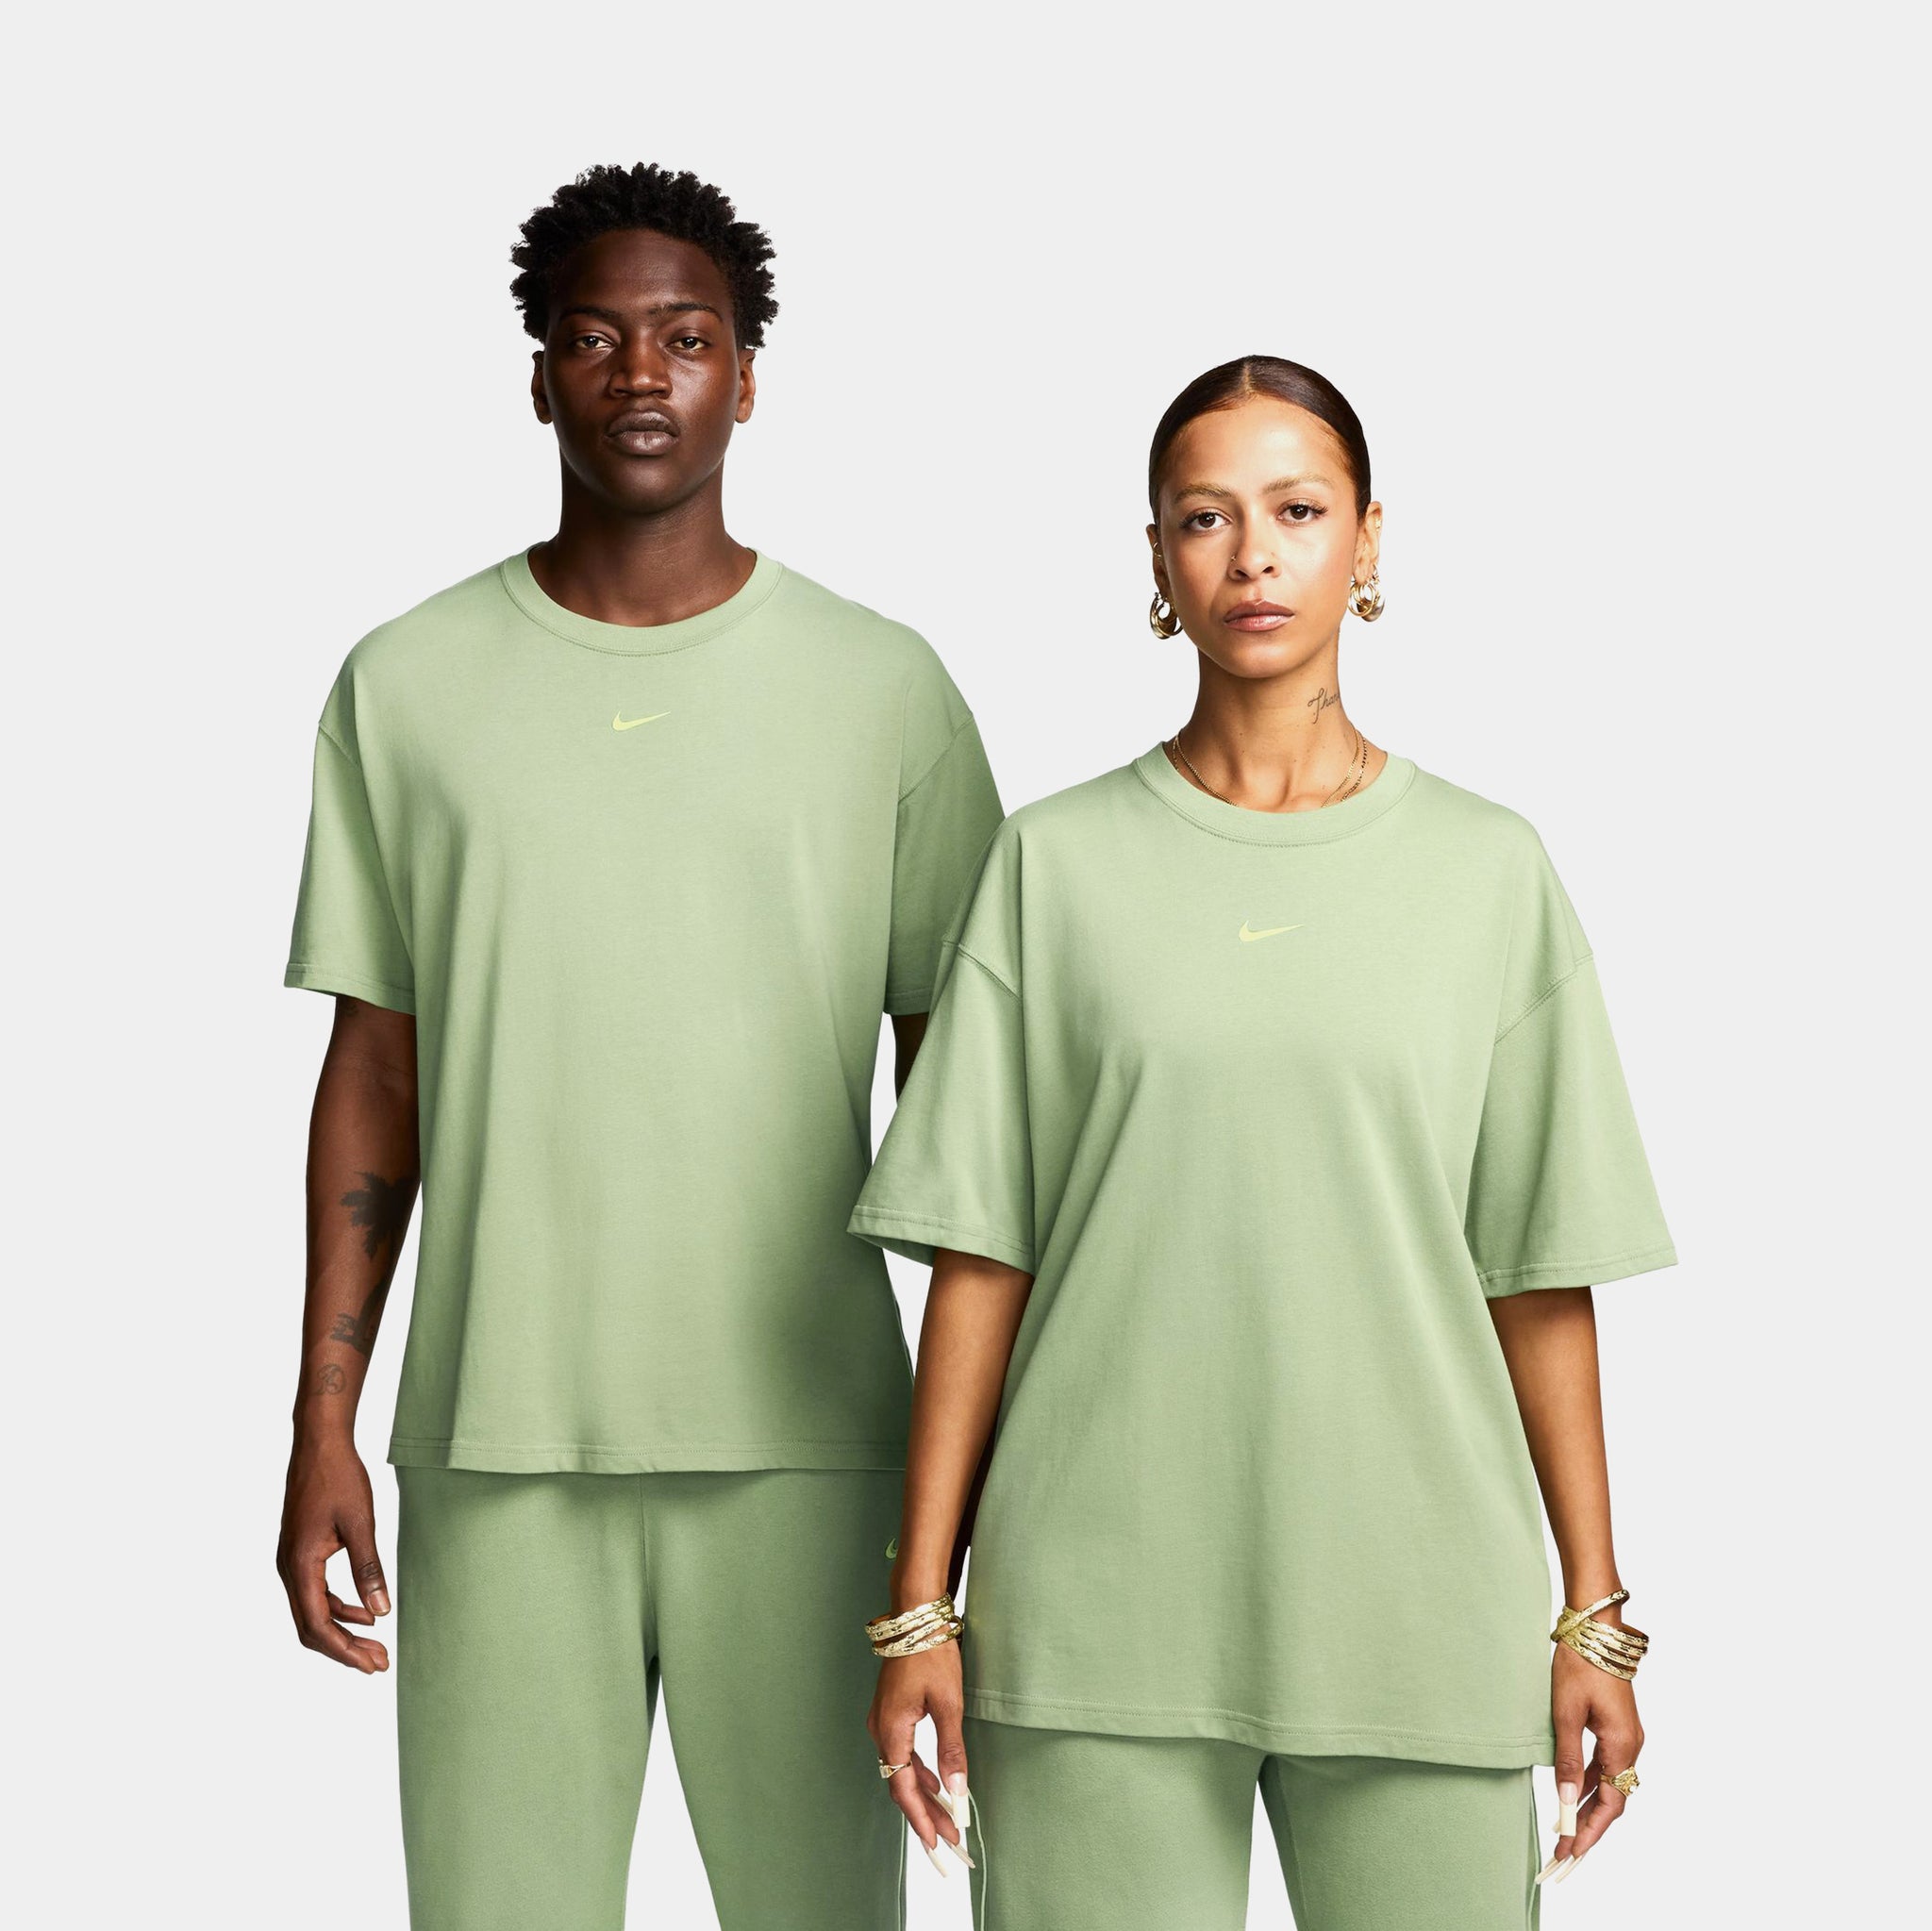 NOCTA Graphic Mens Short Sleeve Shirt (Oil Green/Light Liquid Lime)